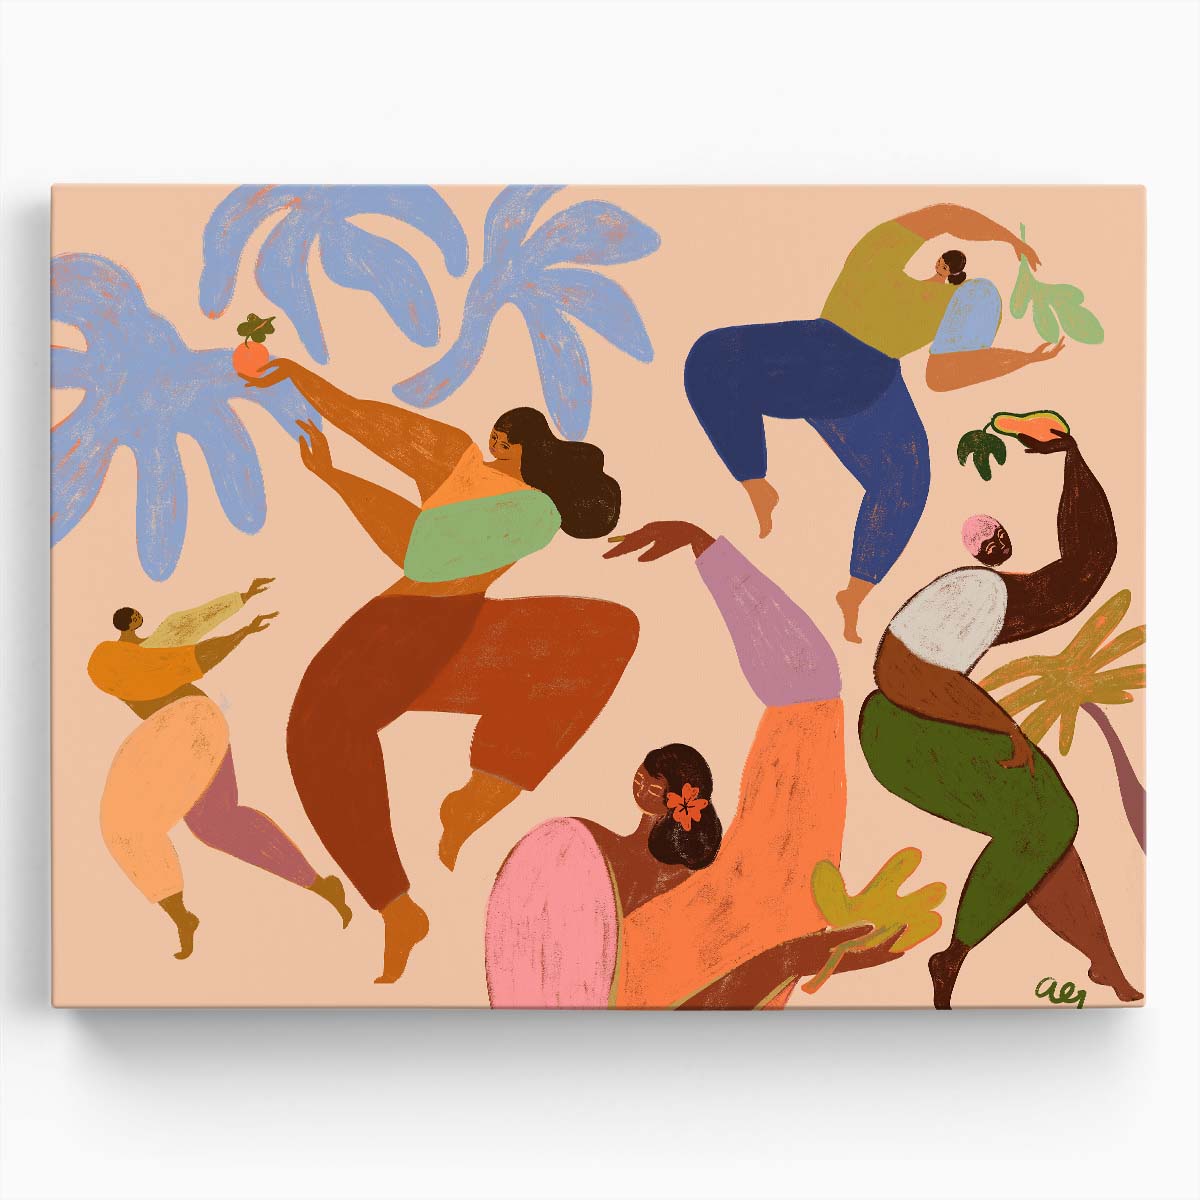 Joyful Sisterhood Dance Colorful Abstract Figurative Wall Art by Luxuriance Designs. Made in USA.